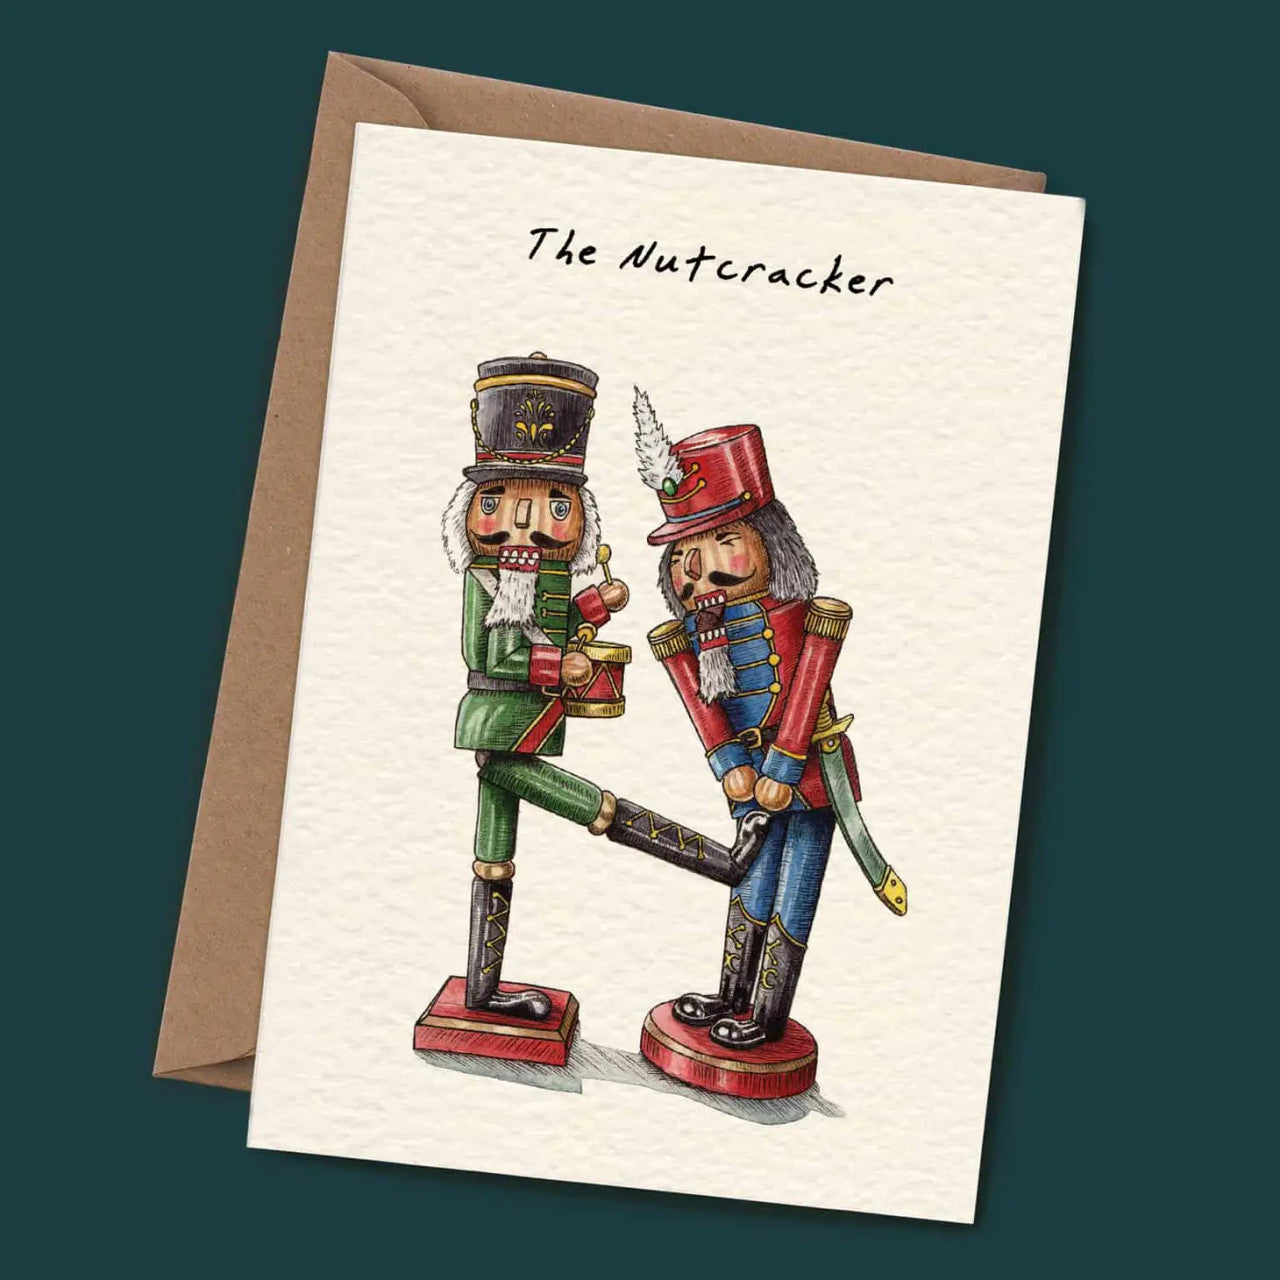 The Nutcracker Christmas Greetings Card by Bewilderbeest.